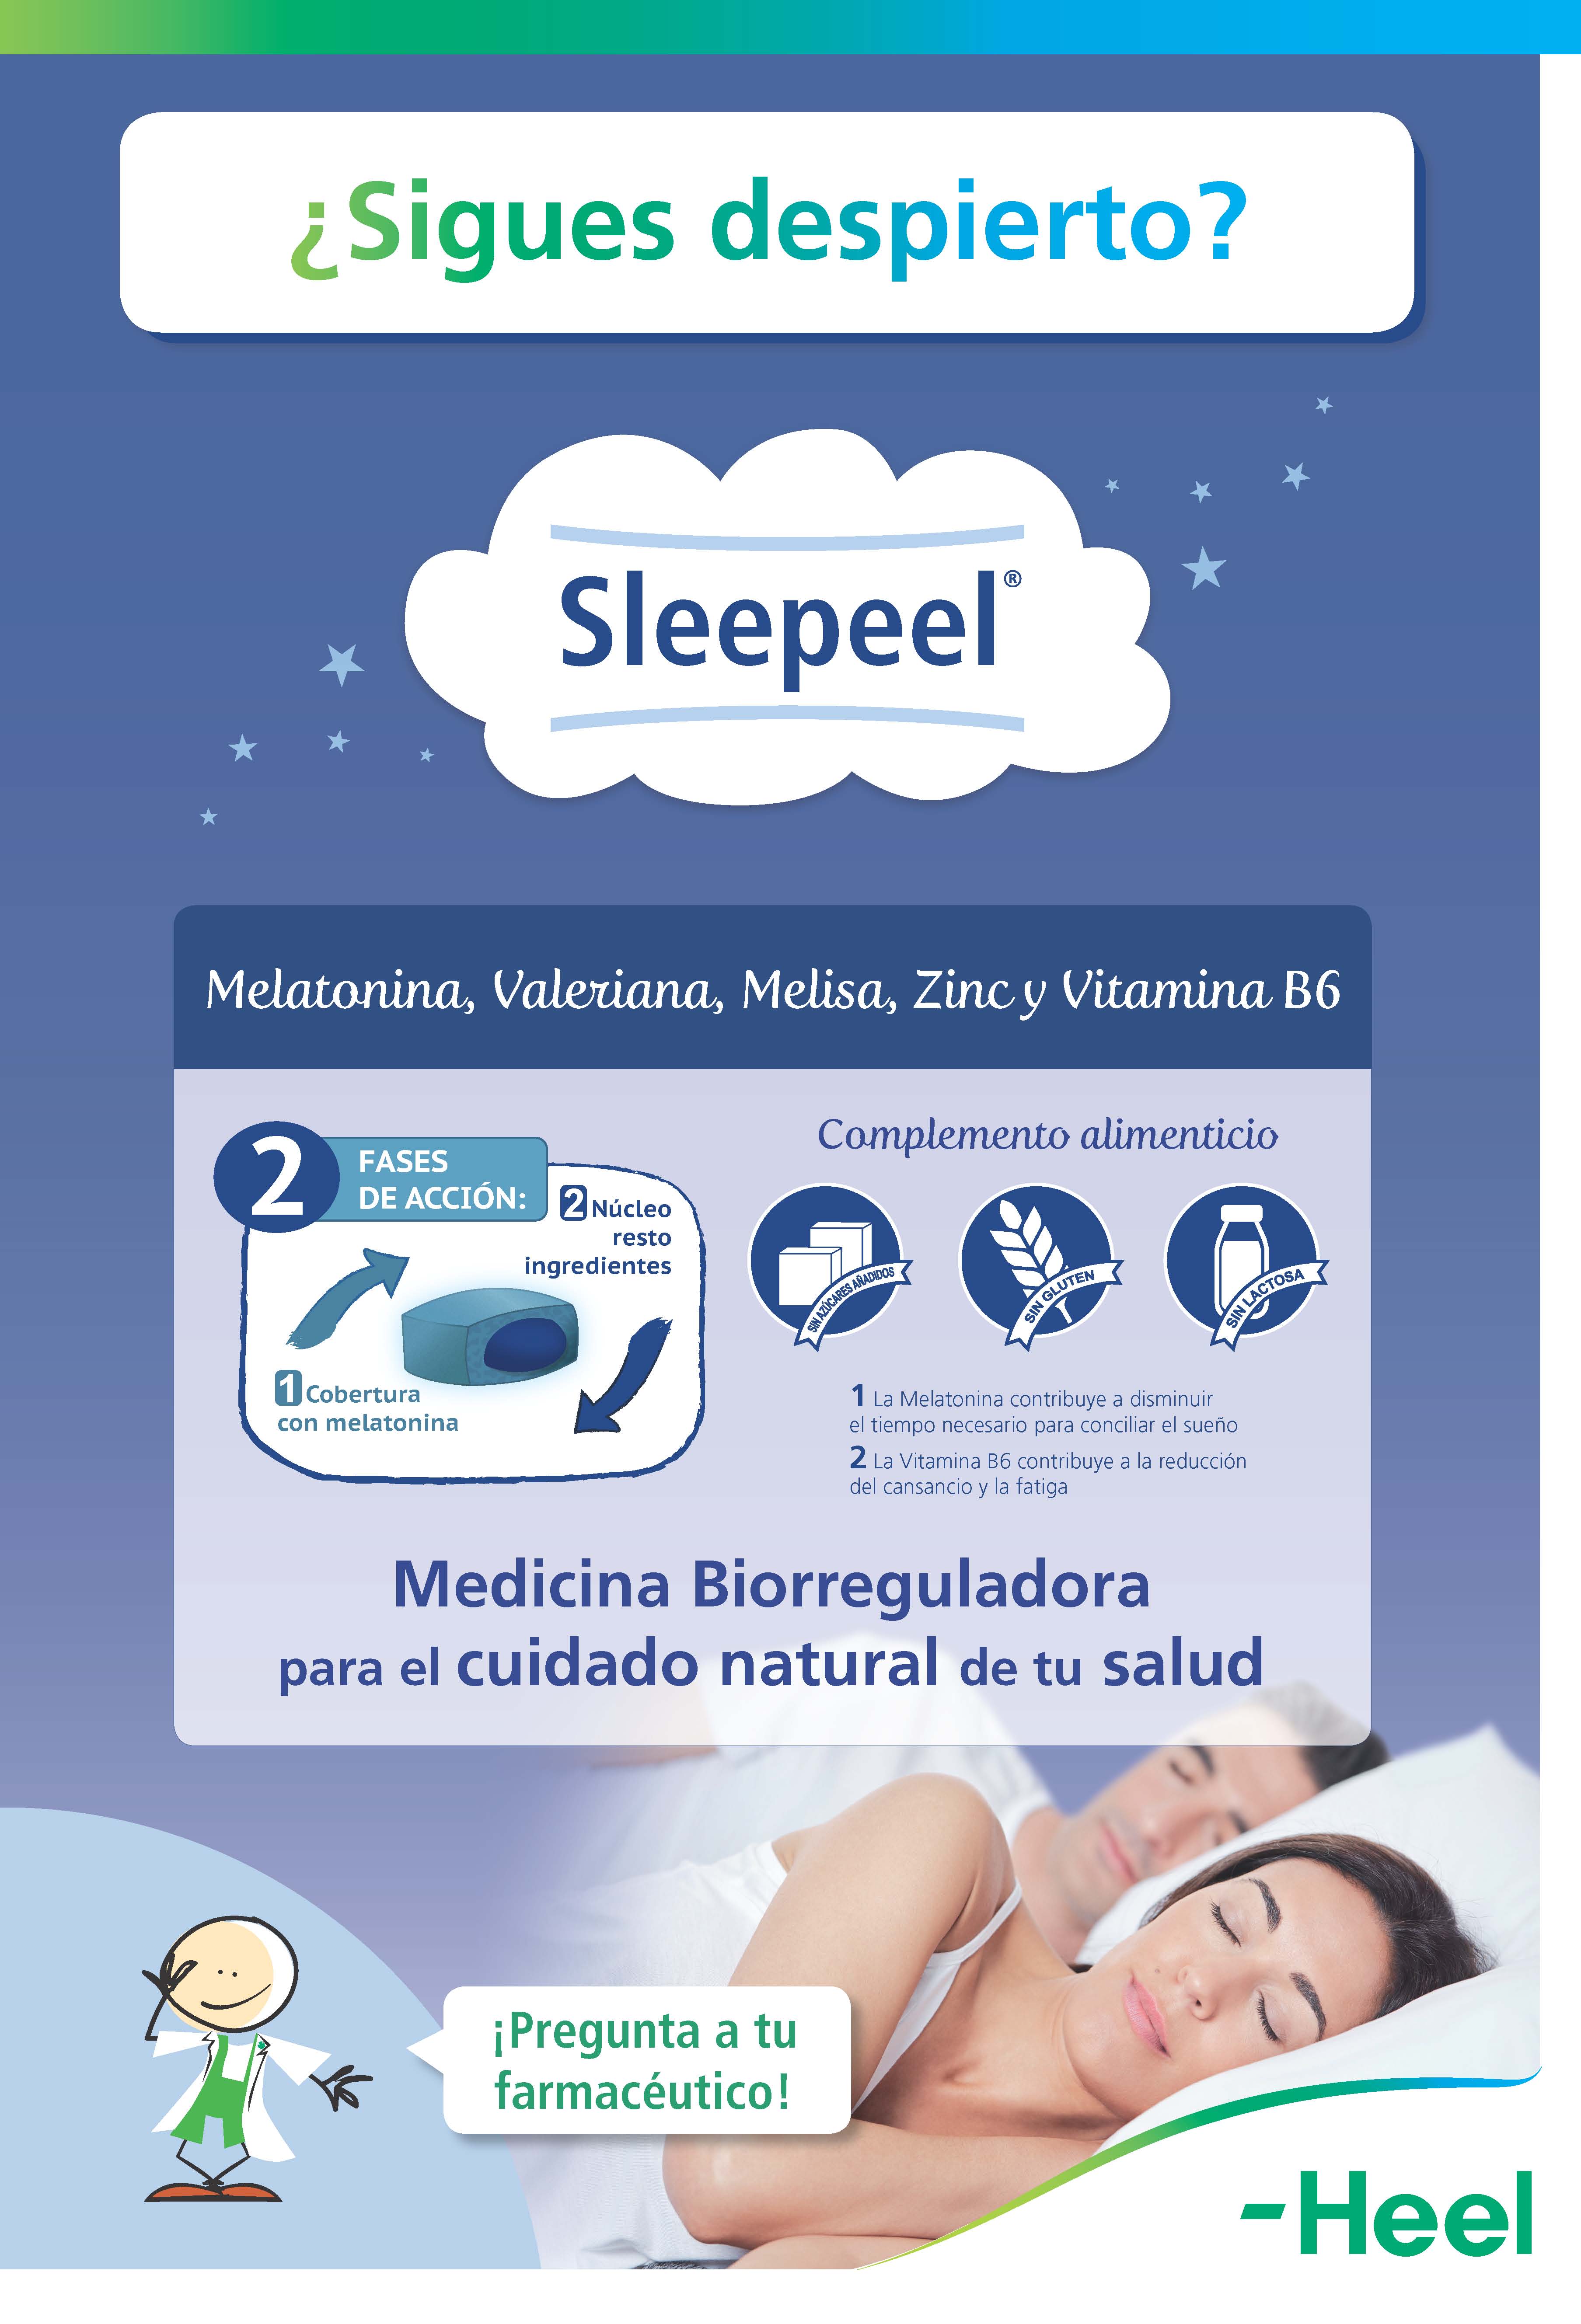 Sleepeel, ¿sigues despierto?: sleepeel infografia 1 - HeelEspaña